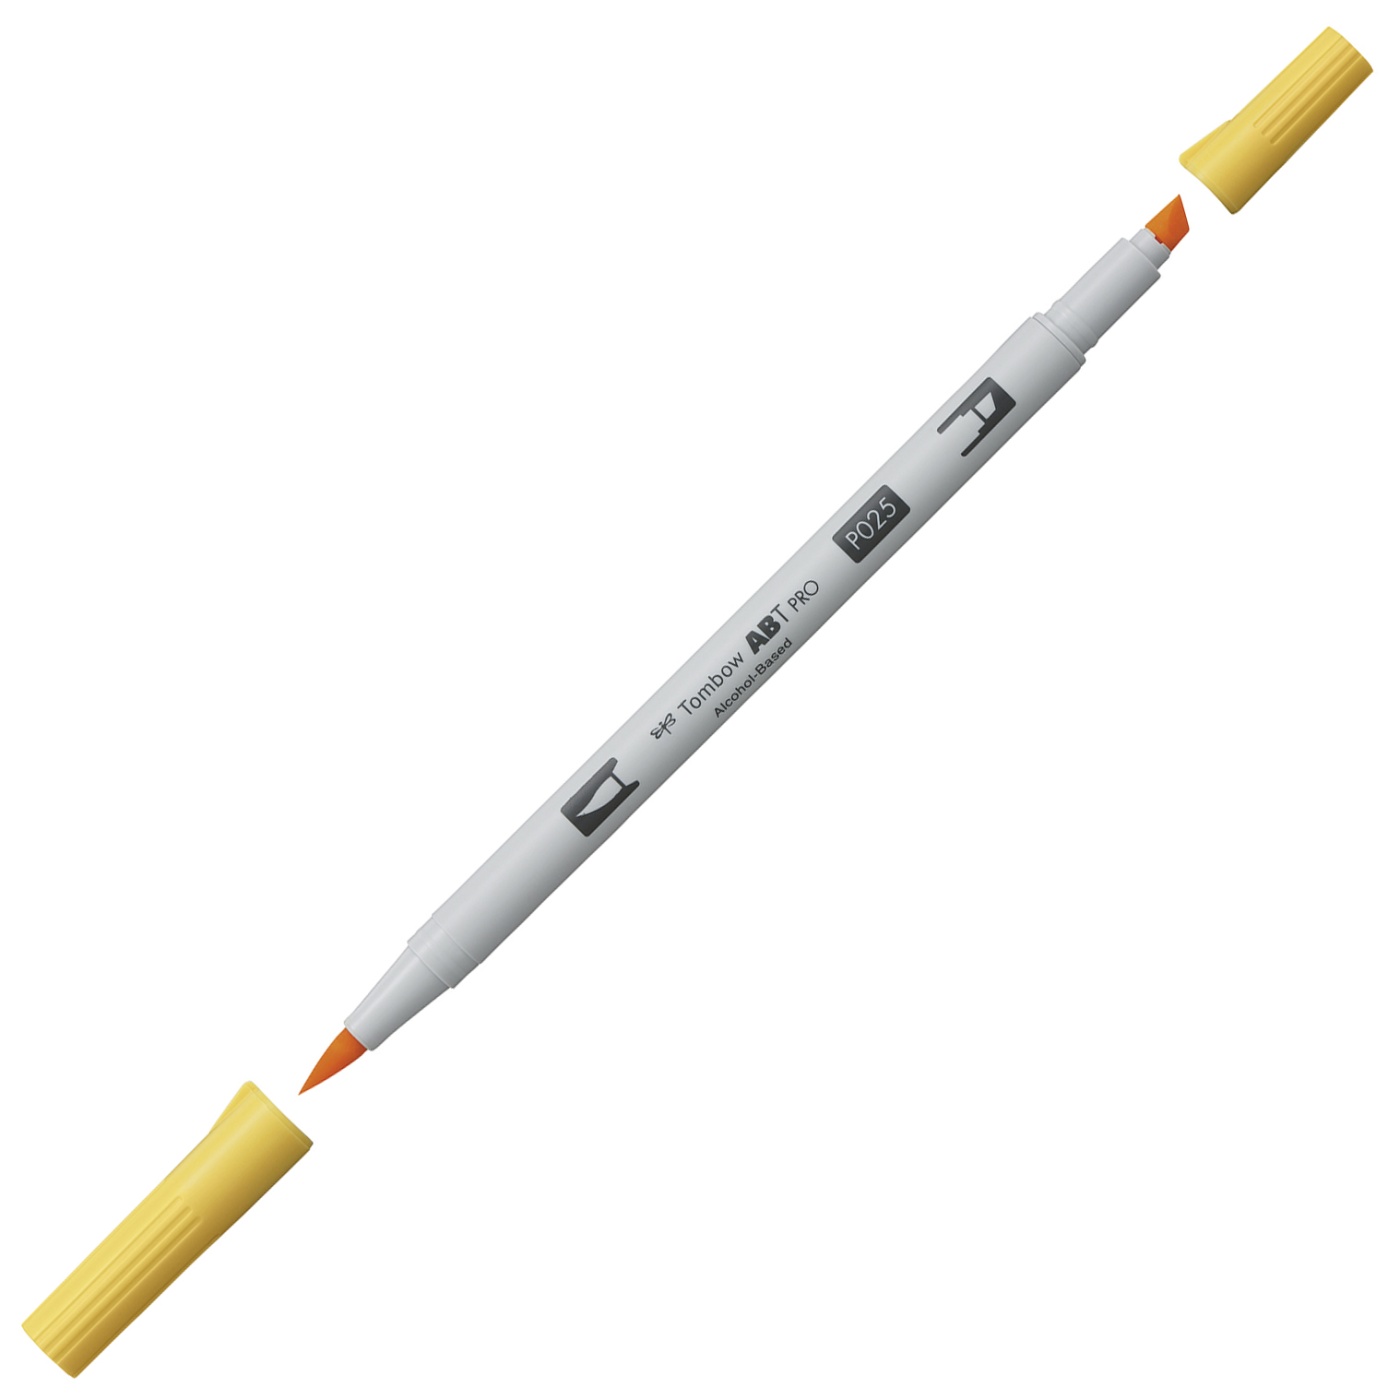 ABT PRO Dual Penselpen 12-sæt Pastell i gruppen Penne / Produktserie / ABT Dual Brush hos Pen Store (101255)